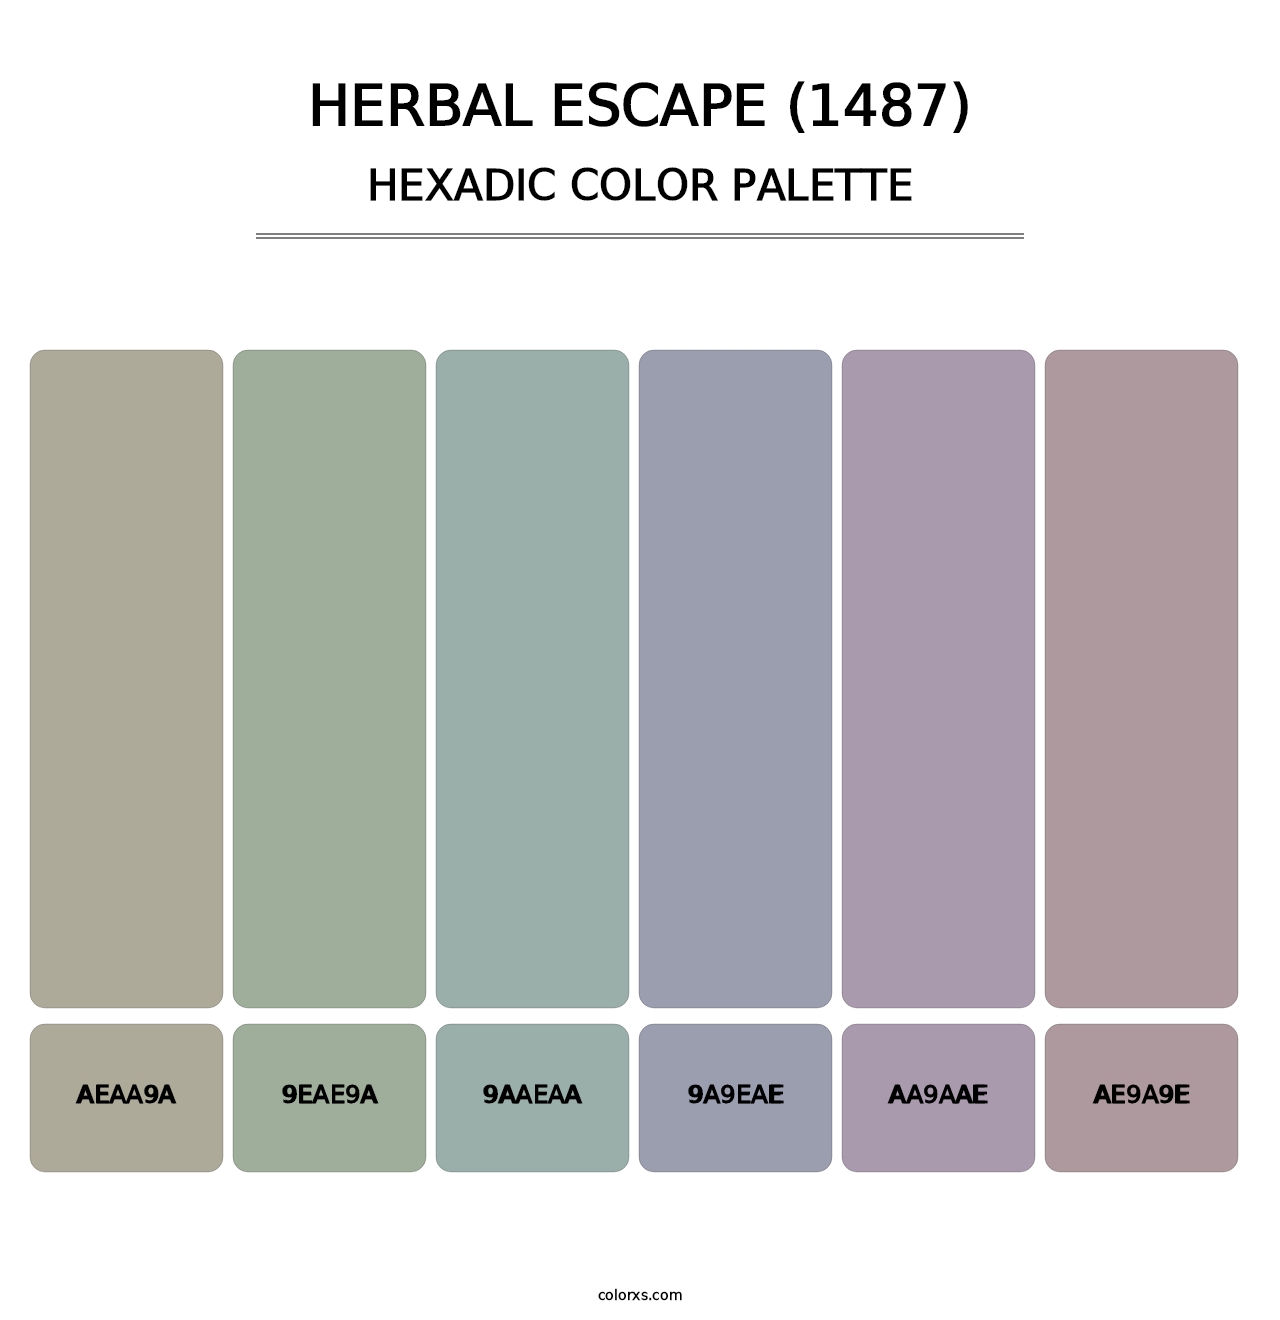 Herbal Escape (1487) - Hexadic Color Palette